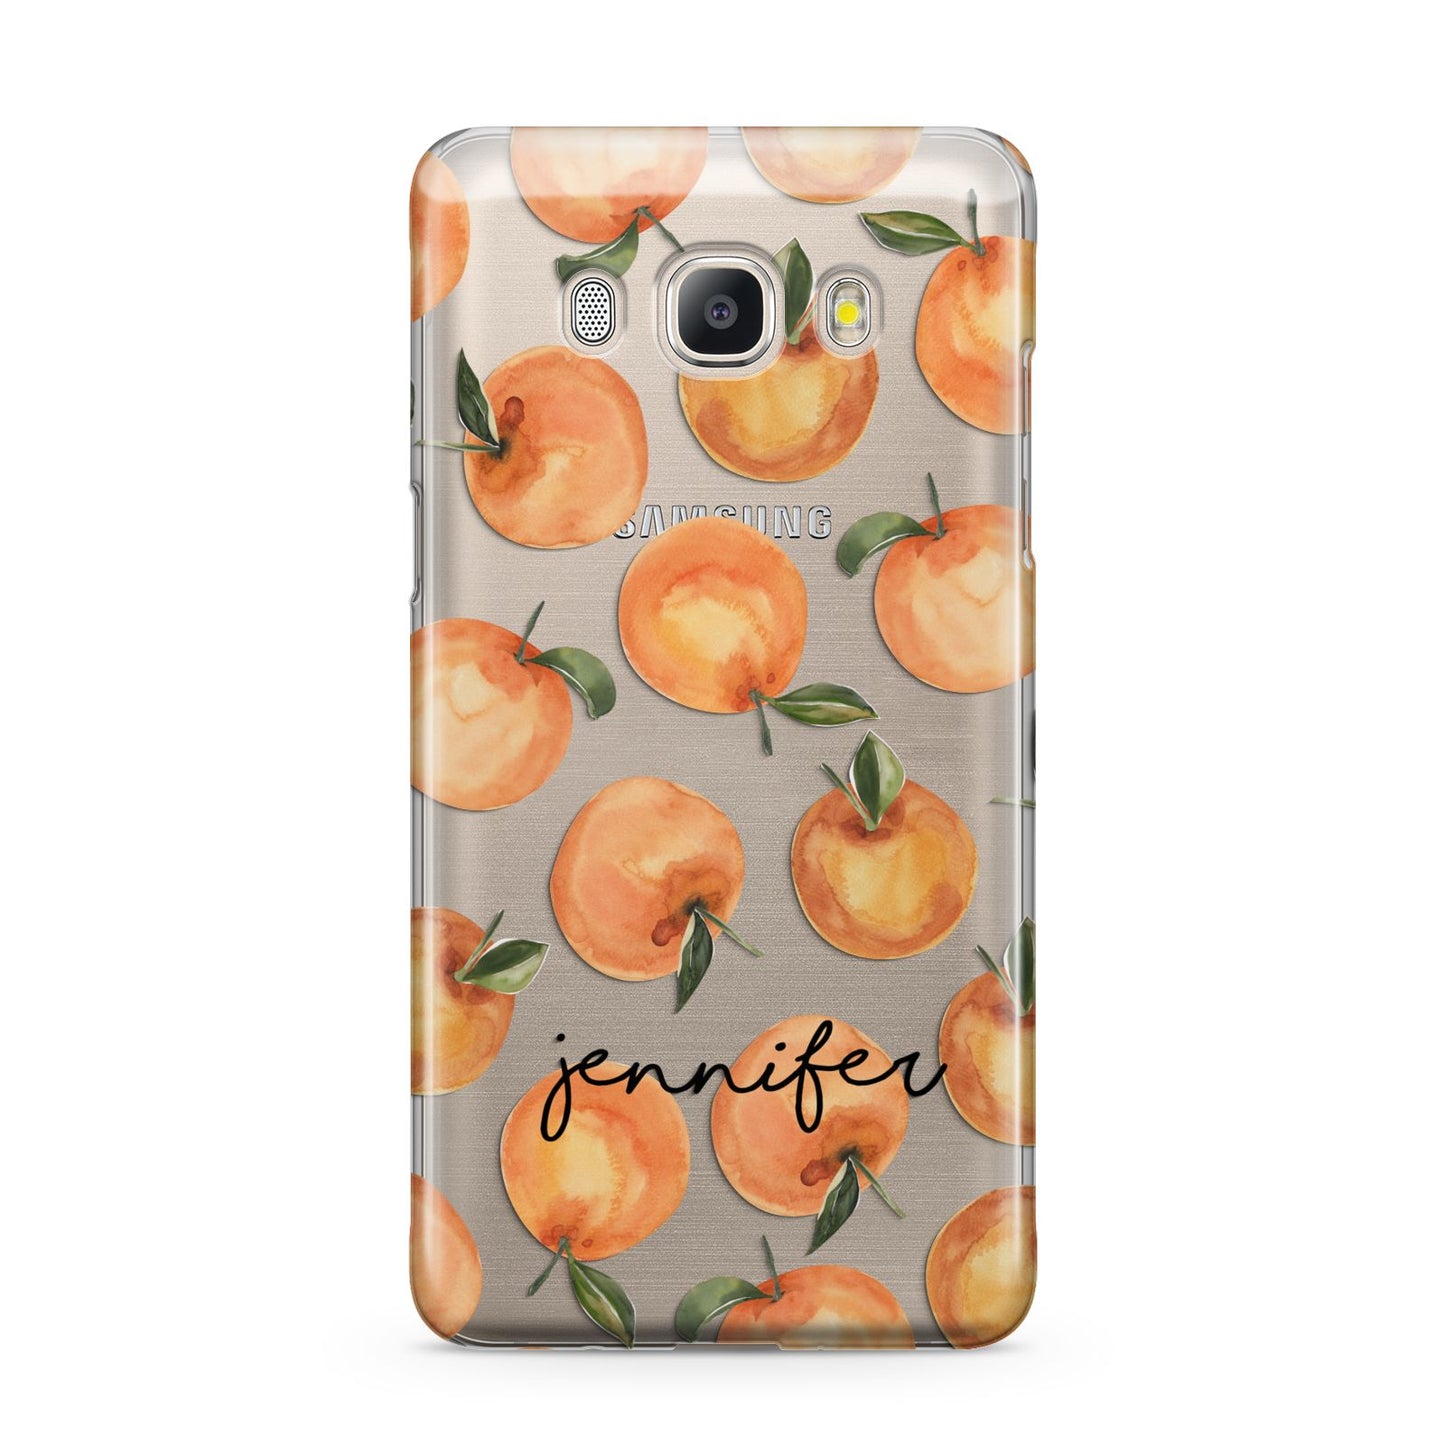 Personalised Oranges Name Samsung Galaxy J5 2016 Case